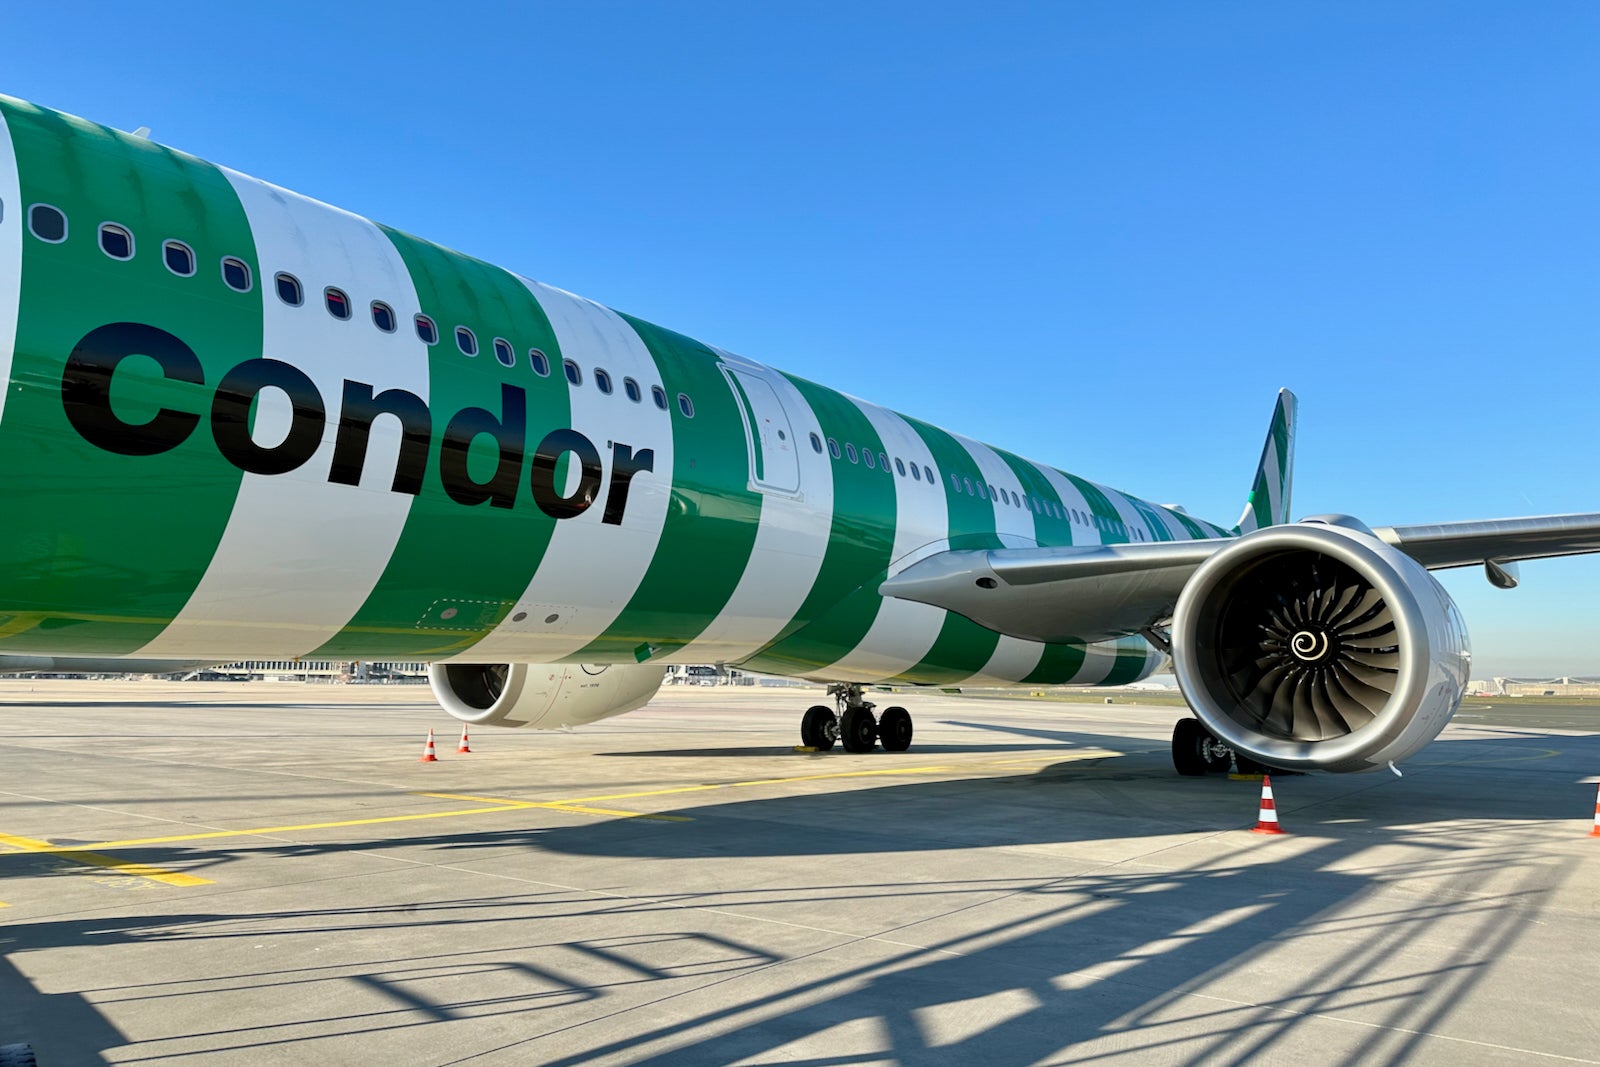 Condor Airlines begins service at Logan Airport